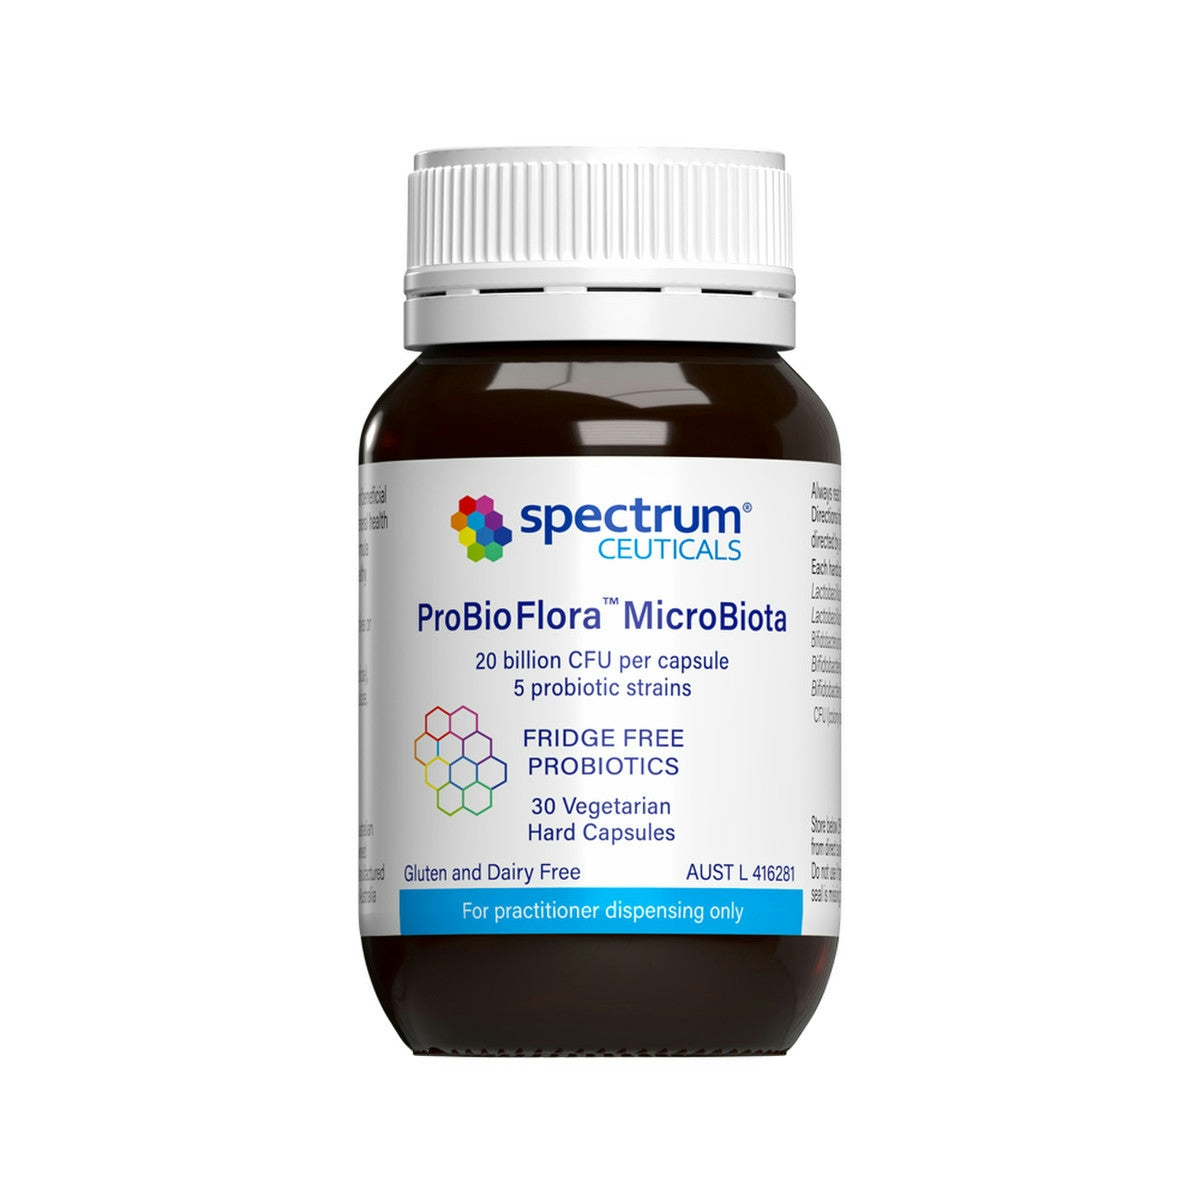 image of Spectrumceuticals ProBioFlora MicroBiota (Fridge Free Probiotics) 30vc on white background